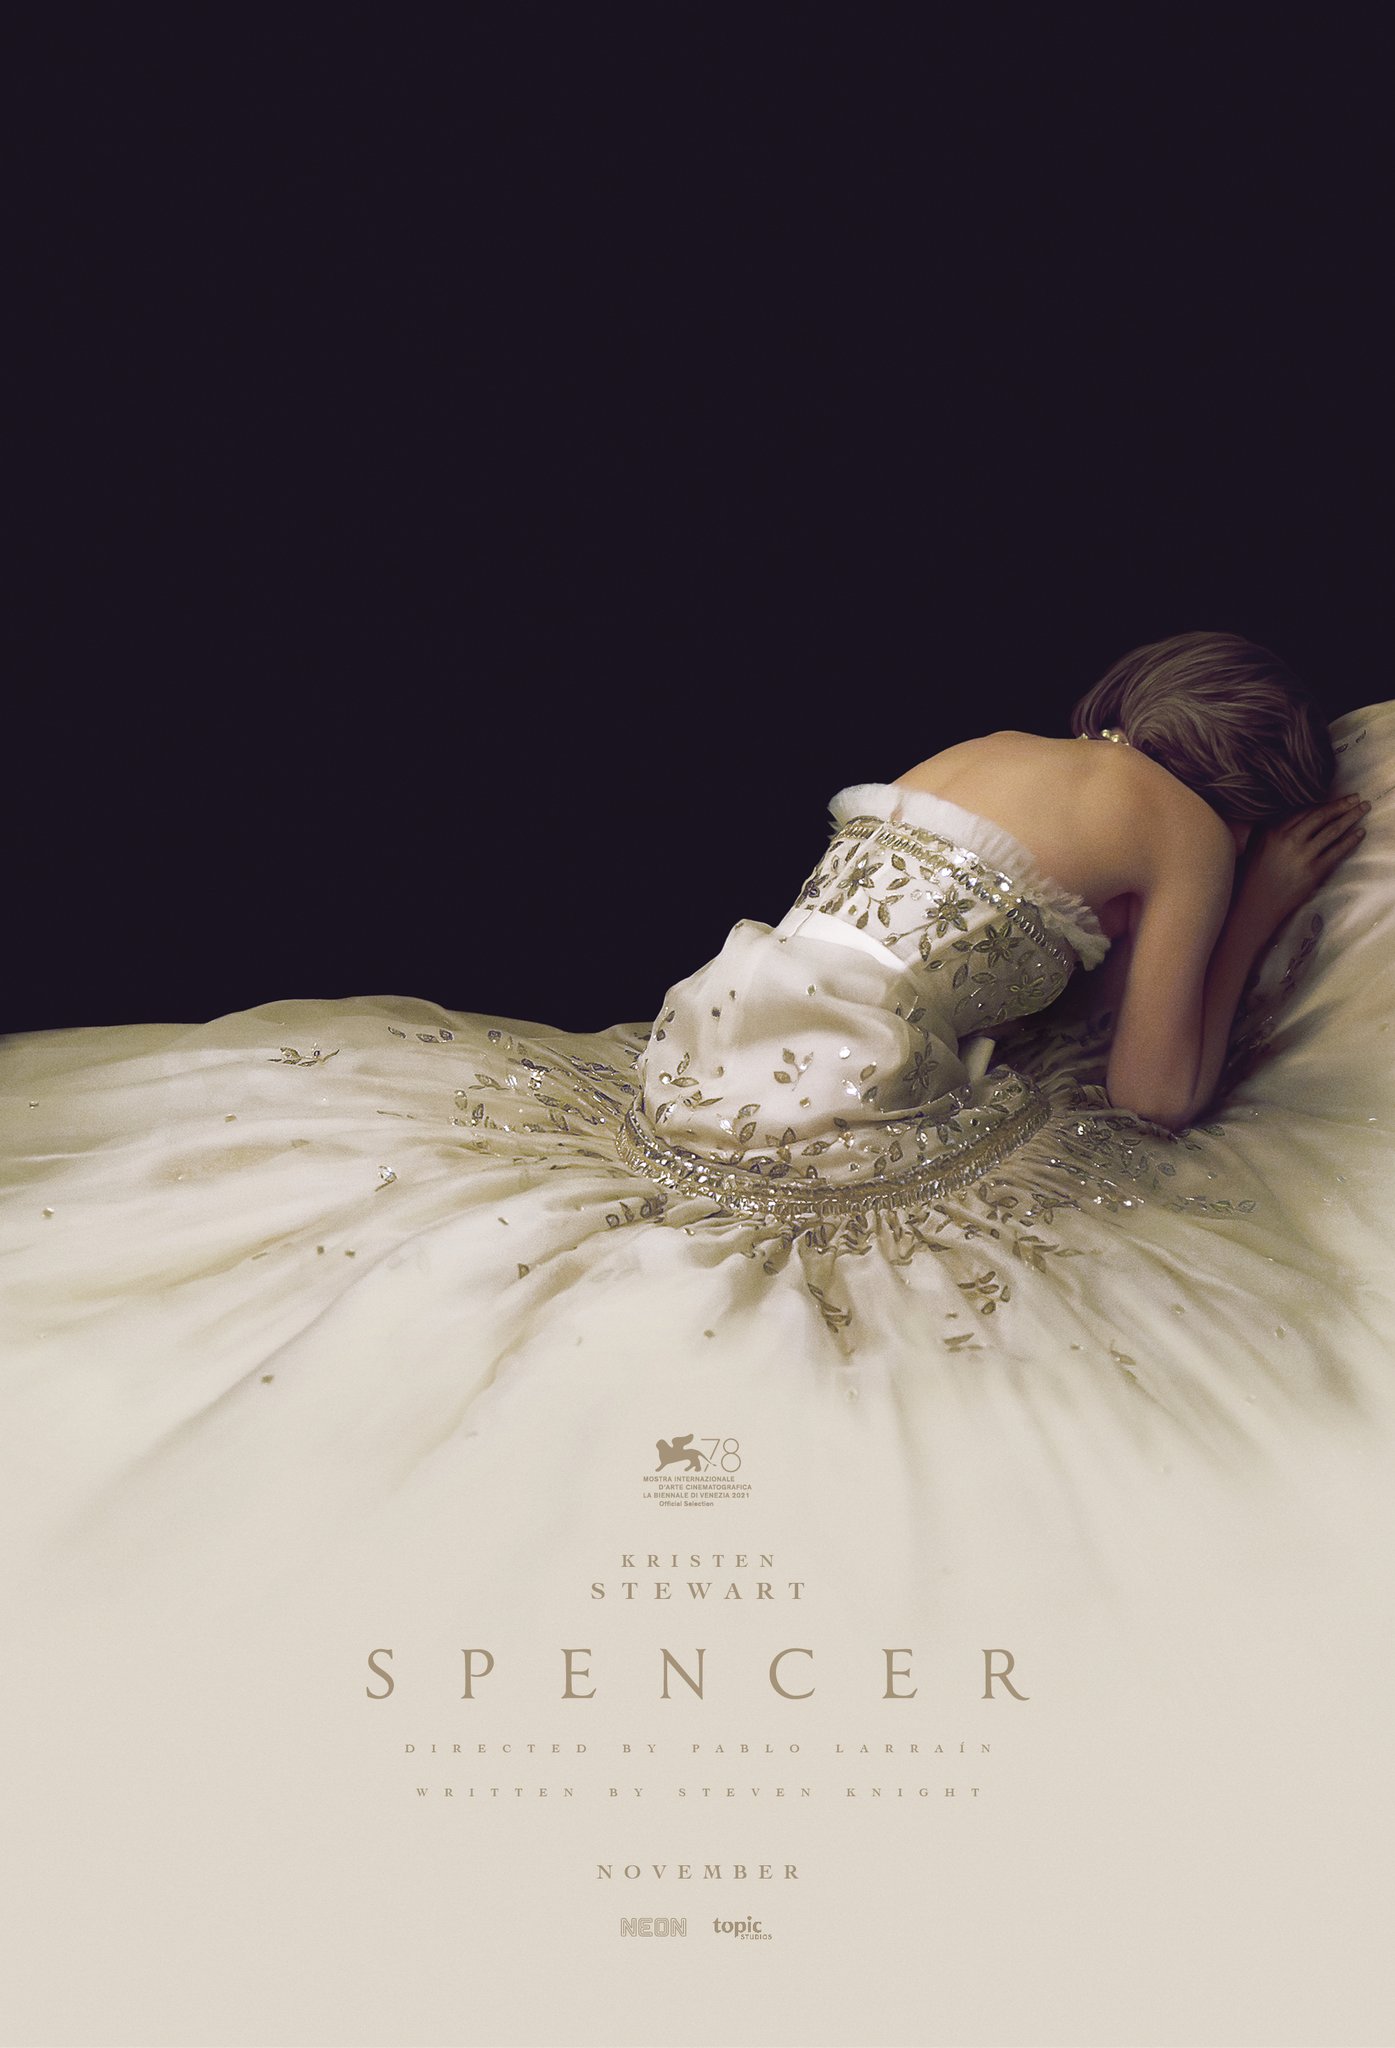 Movie poster for SPENCER. Showing Kristen Stewart (as Diana Spencer) curled up against her elegant evening dress on a dark background.